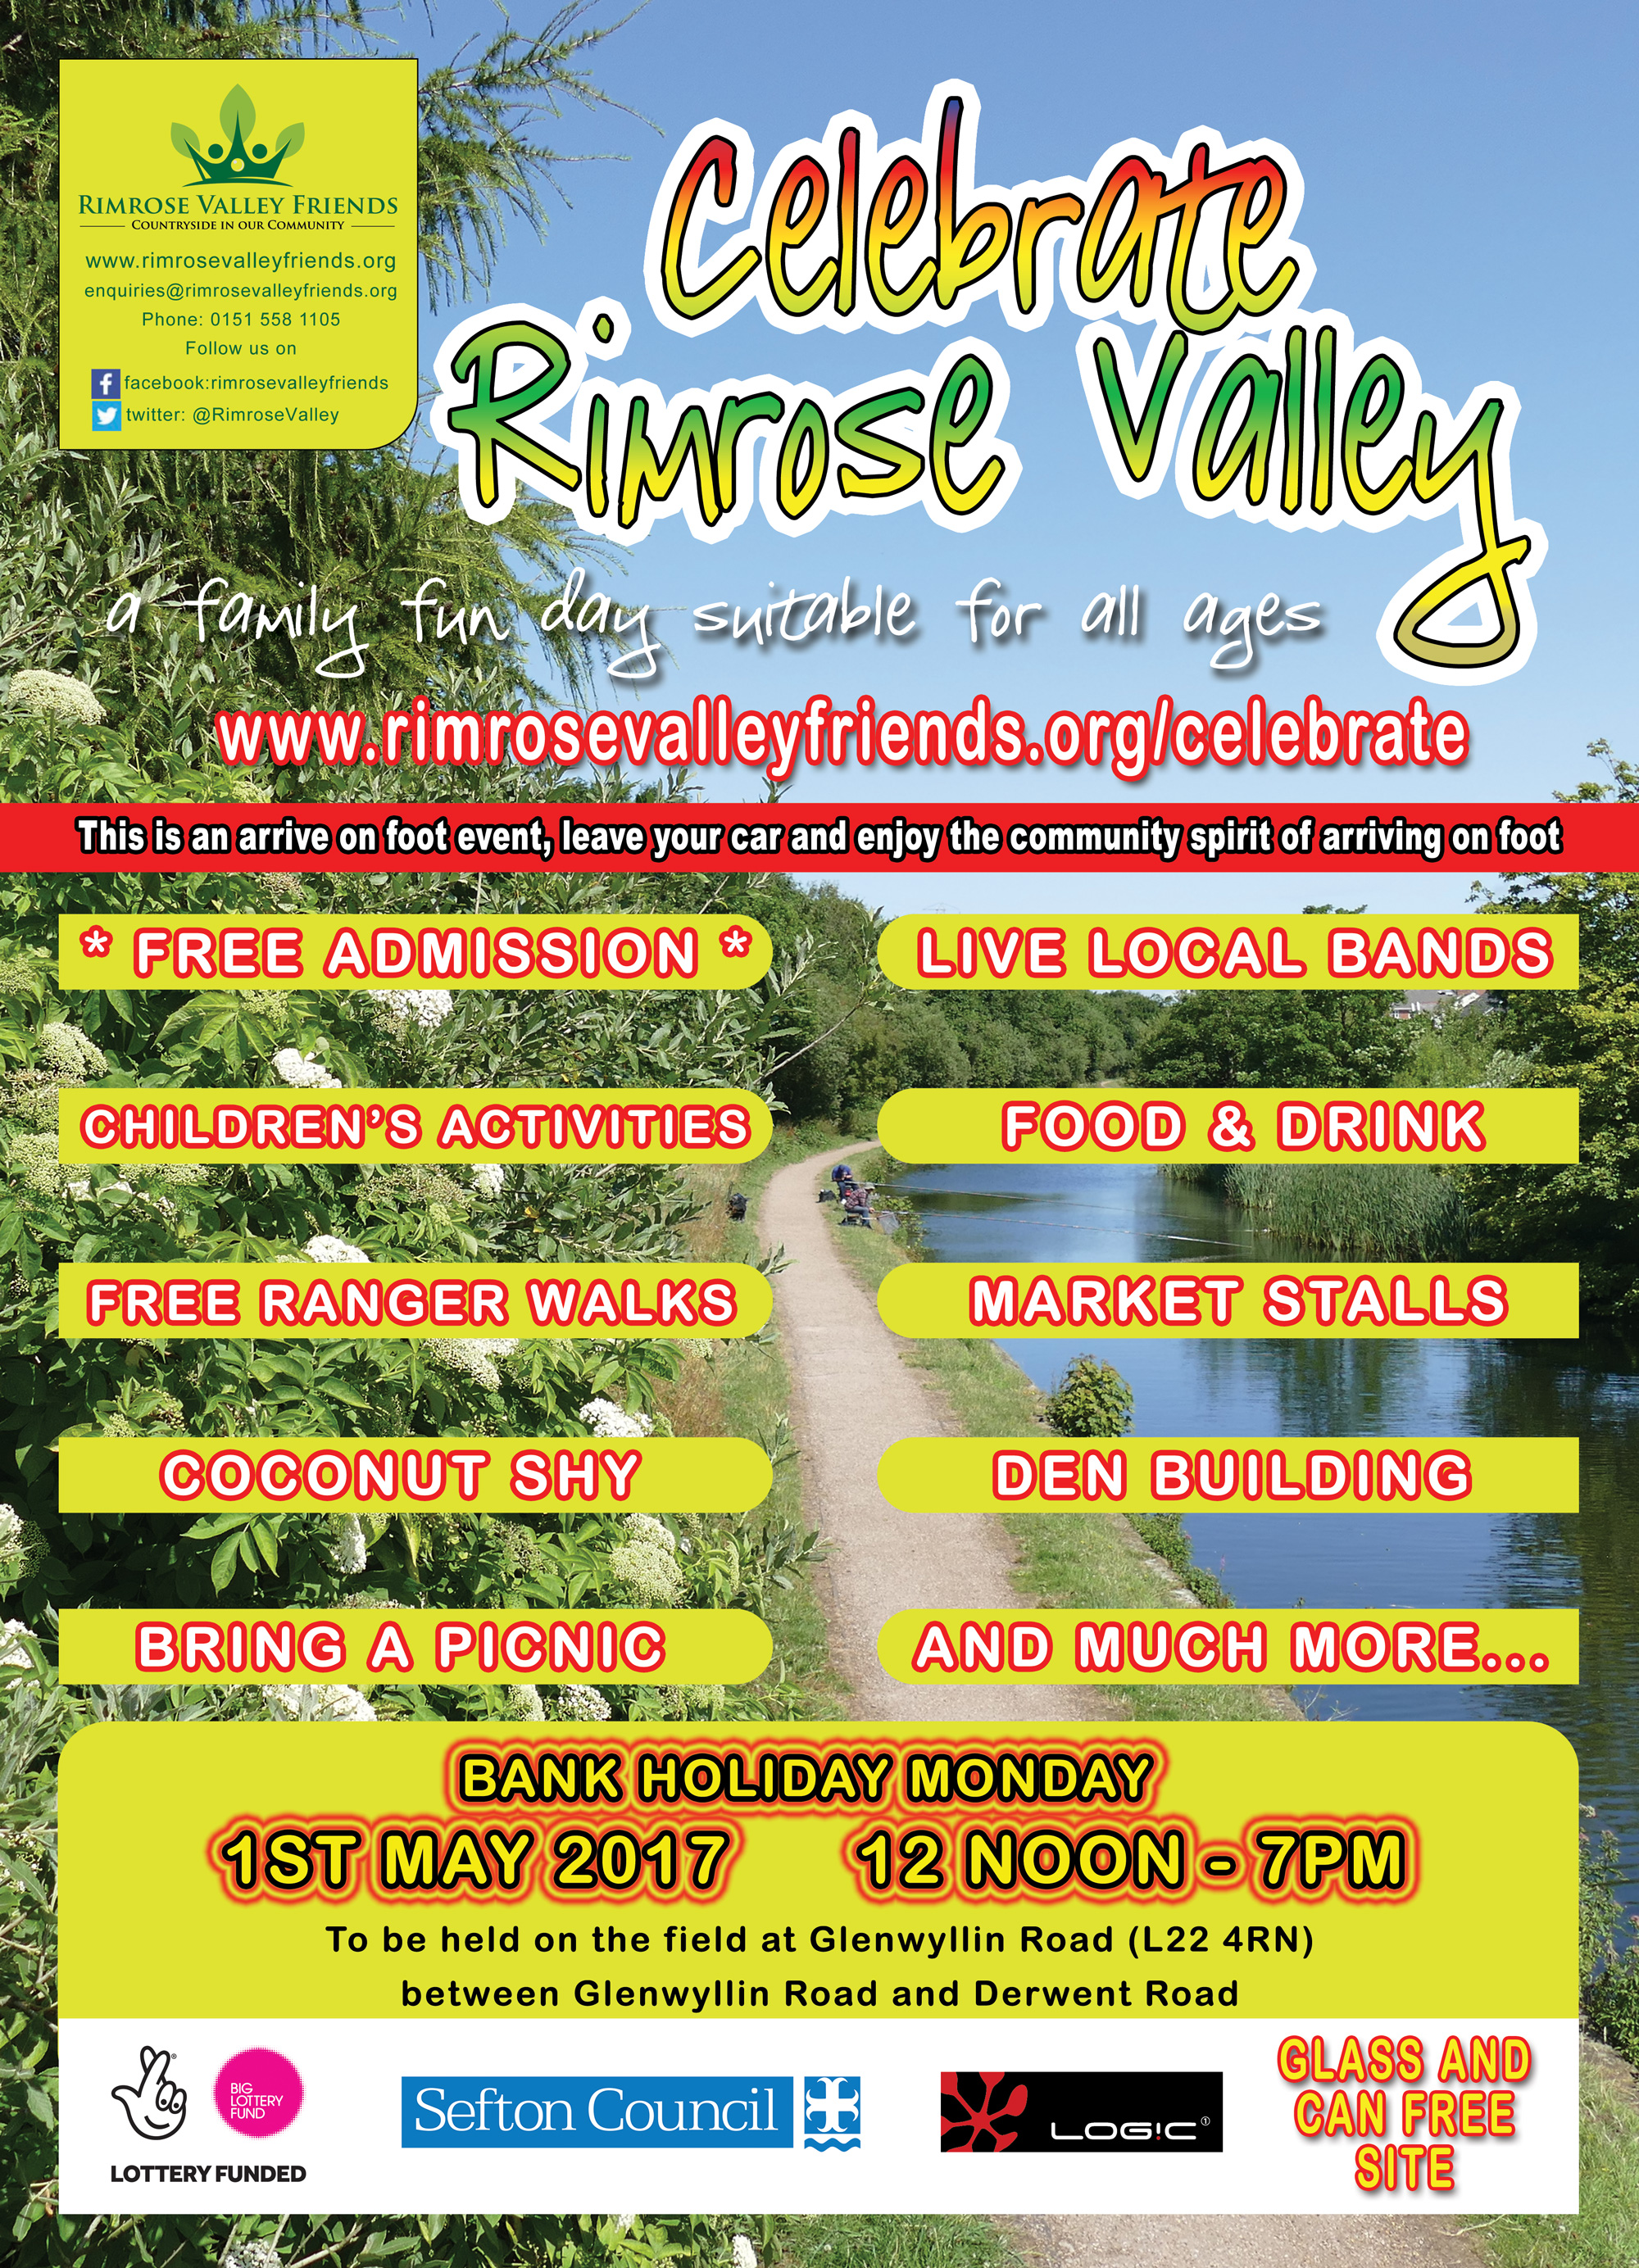 Celebrate Rimrose Valley